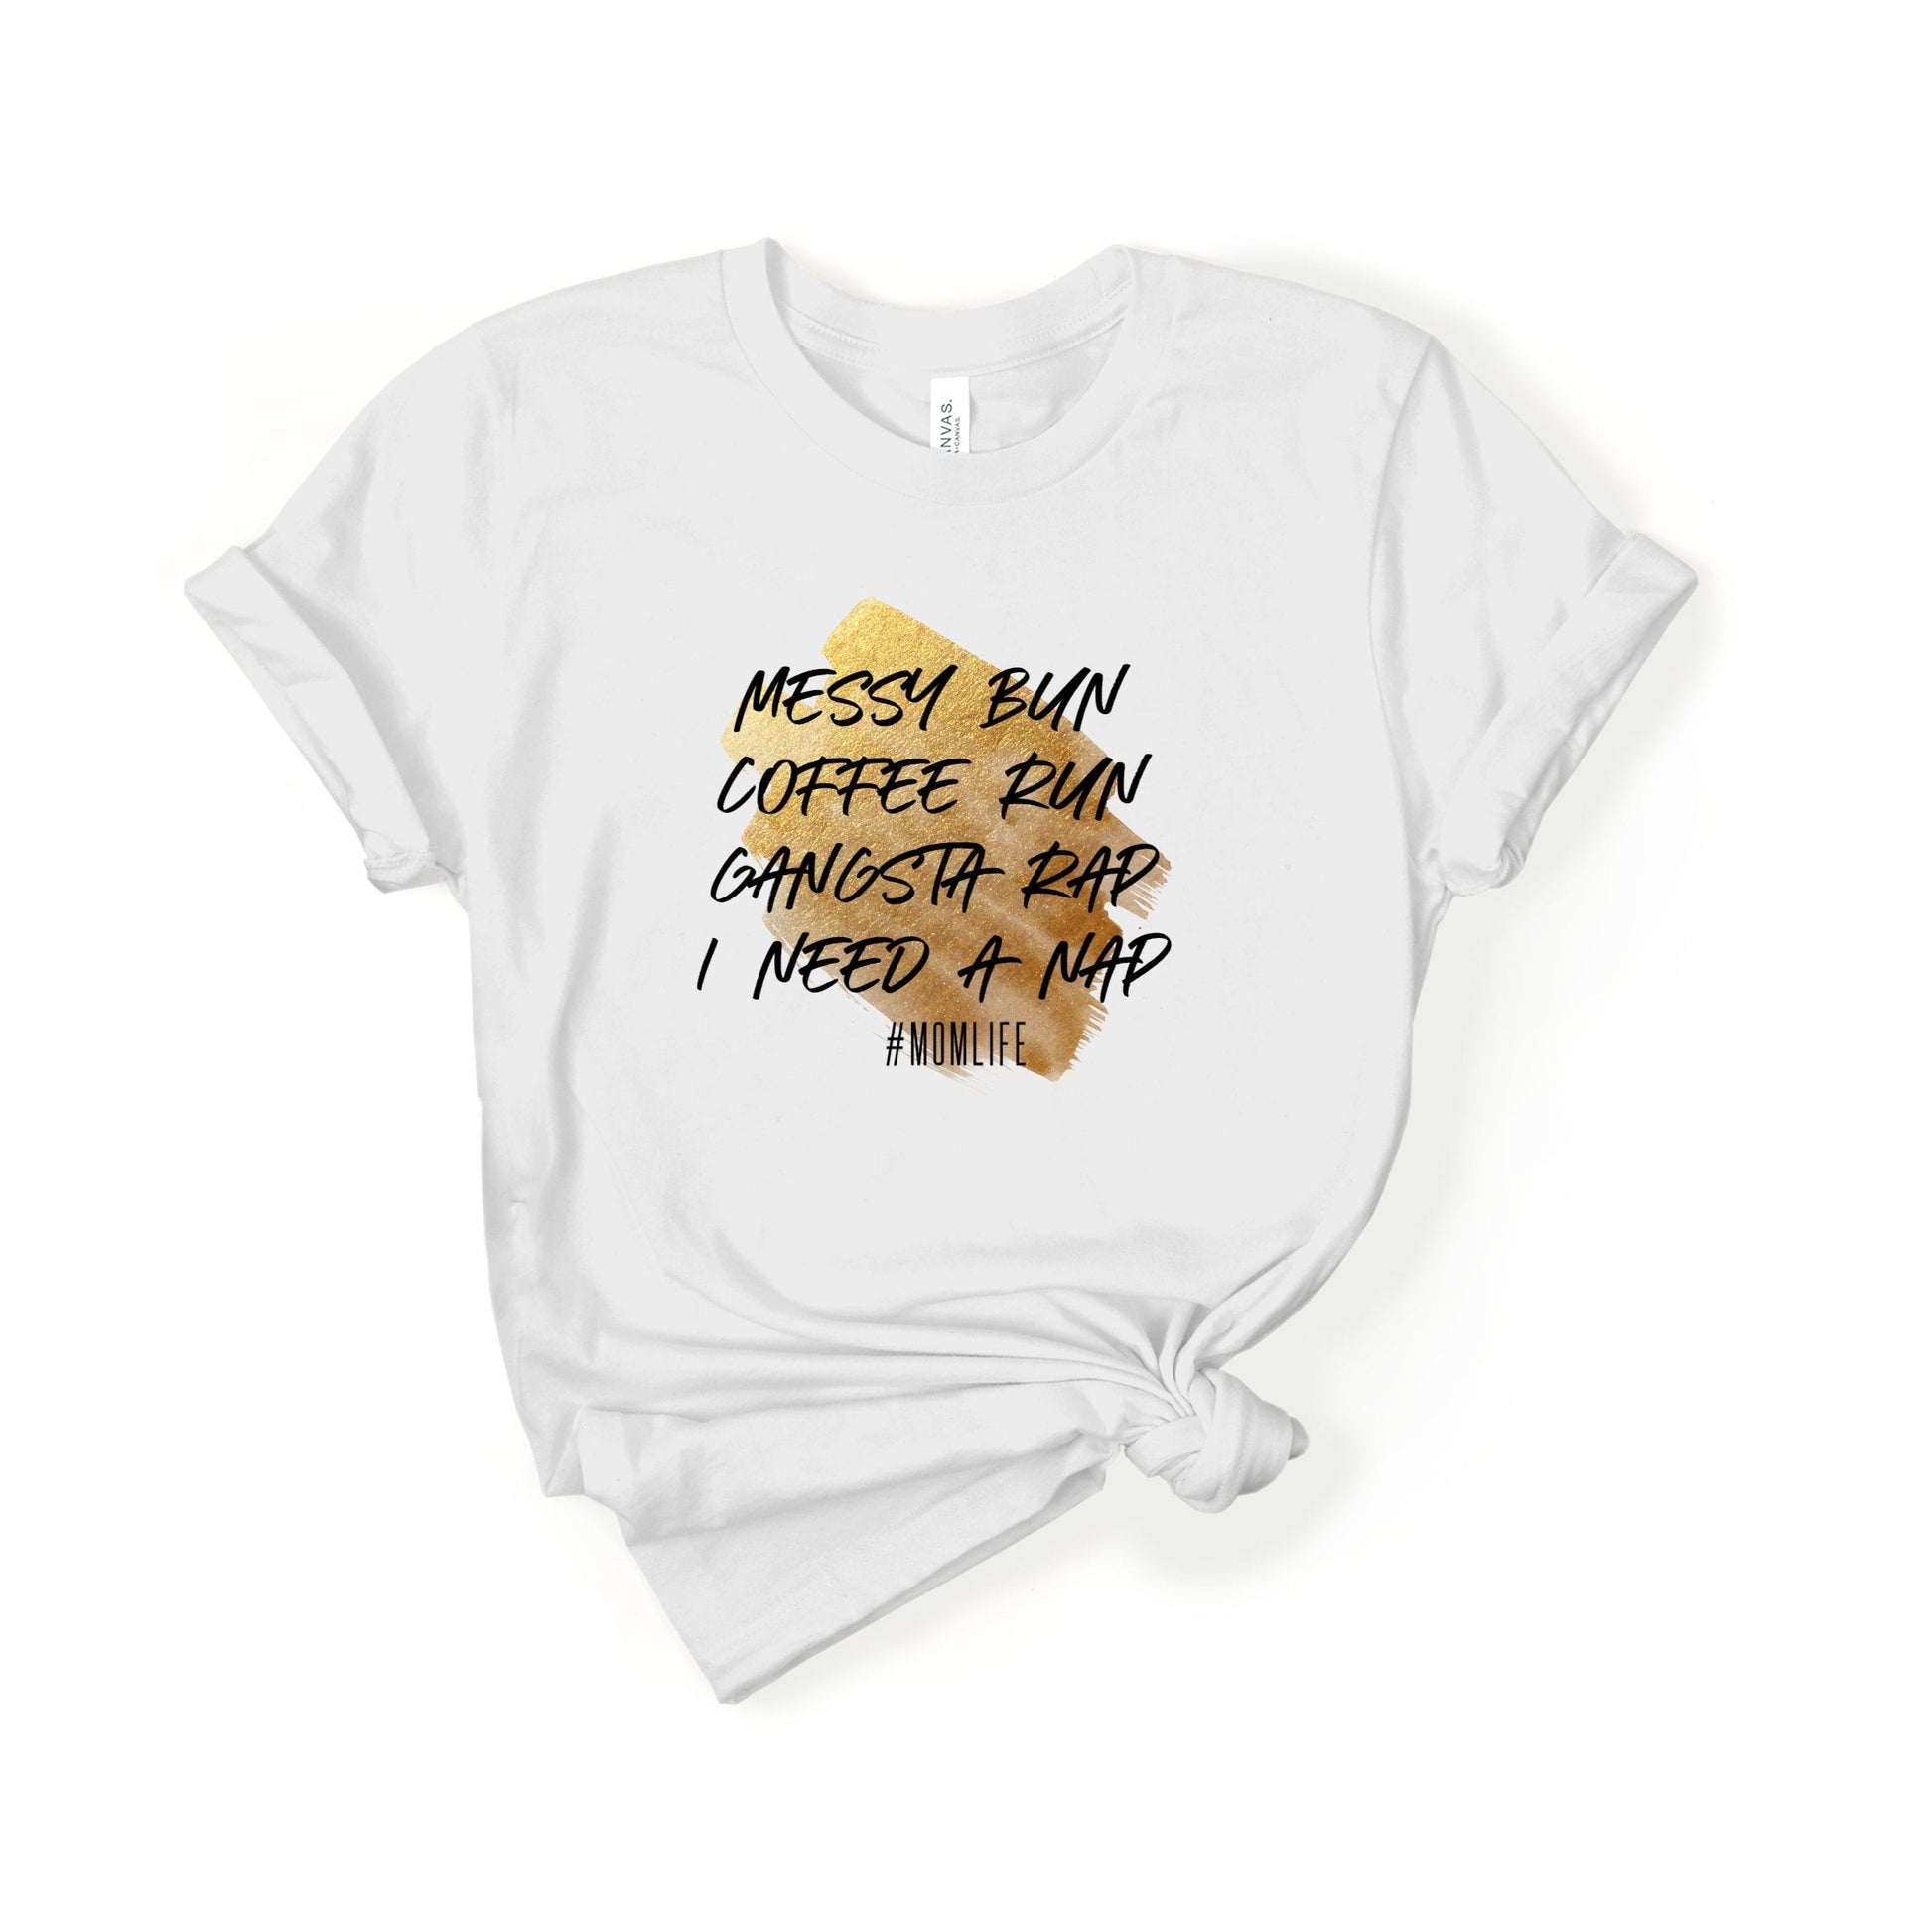 Gangsta Rap Mom Shirt, Messy Bun Mom Shirt, Mom Life Shirt, Coffee Run, Gift for Her, Mothers Day Gift, Shirt for Mom, New Mom Shirt - Premium Shirts - Just $21.50! Shop now at Nine Thirty Nine Design